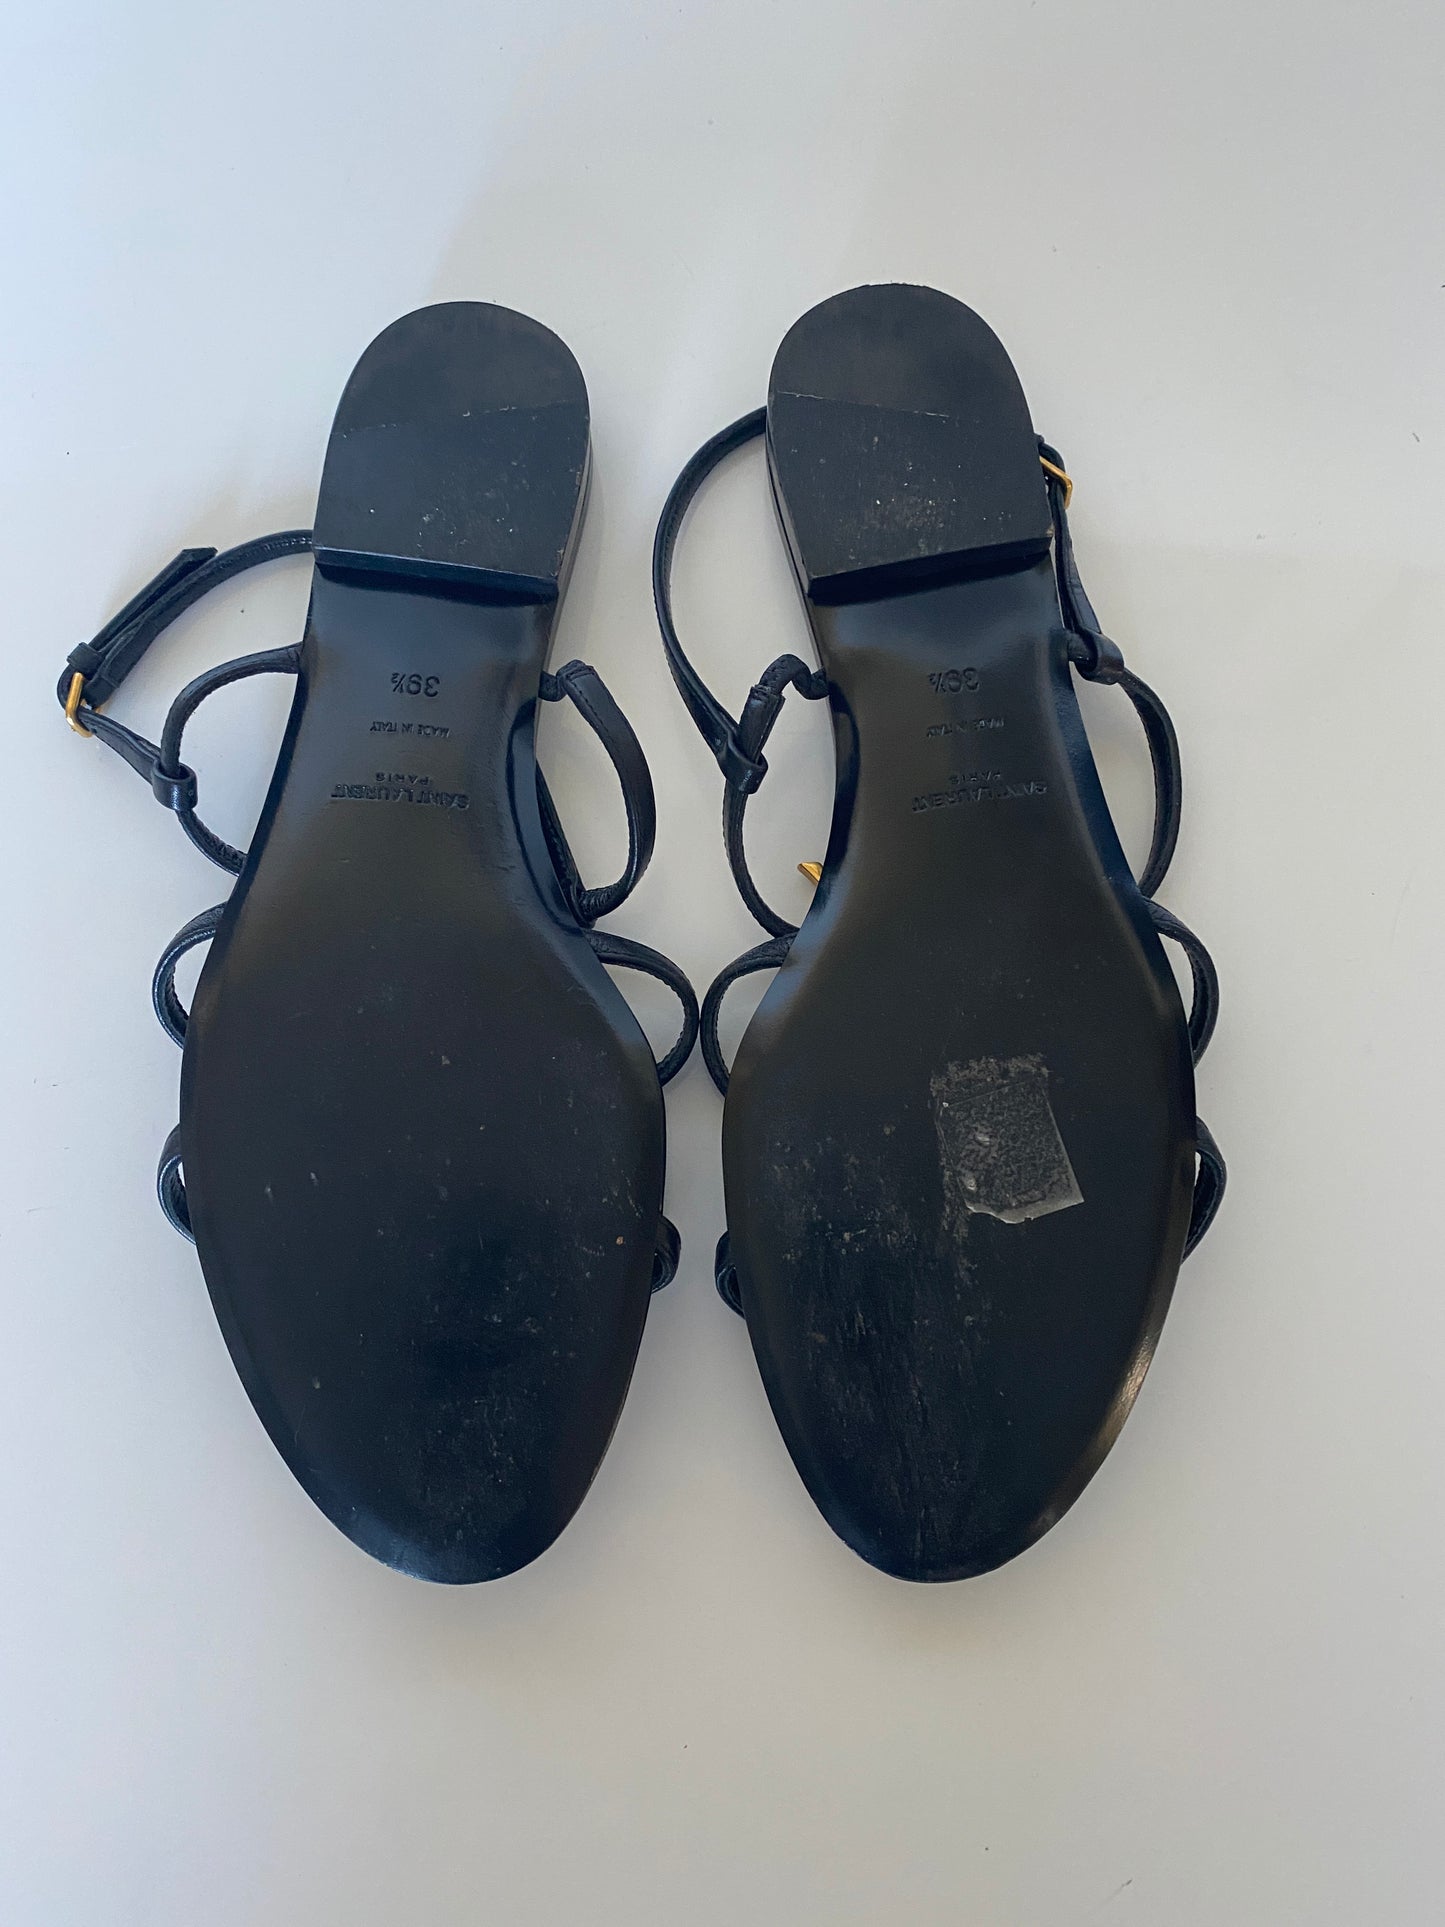 YSL palm monogram black leather sandals size 39.5 6.5